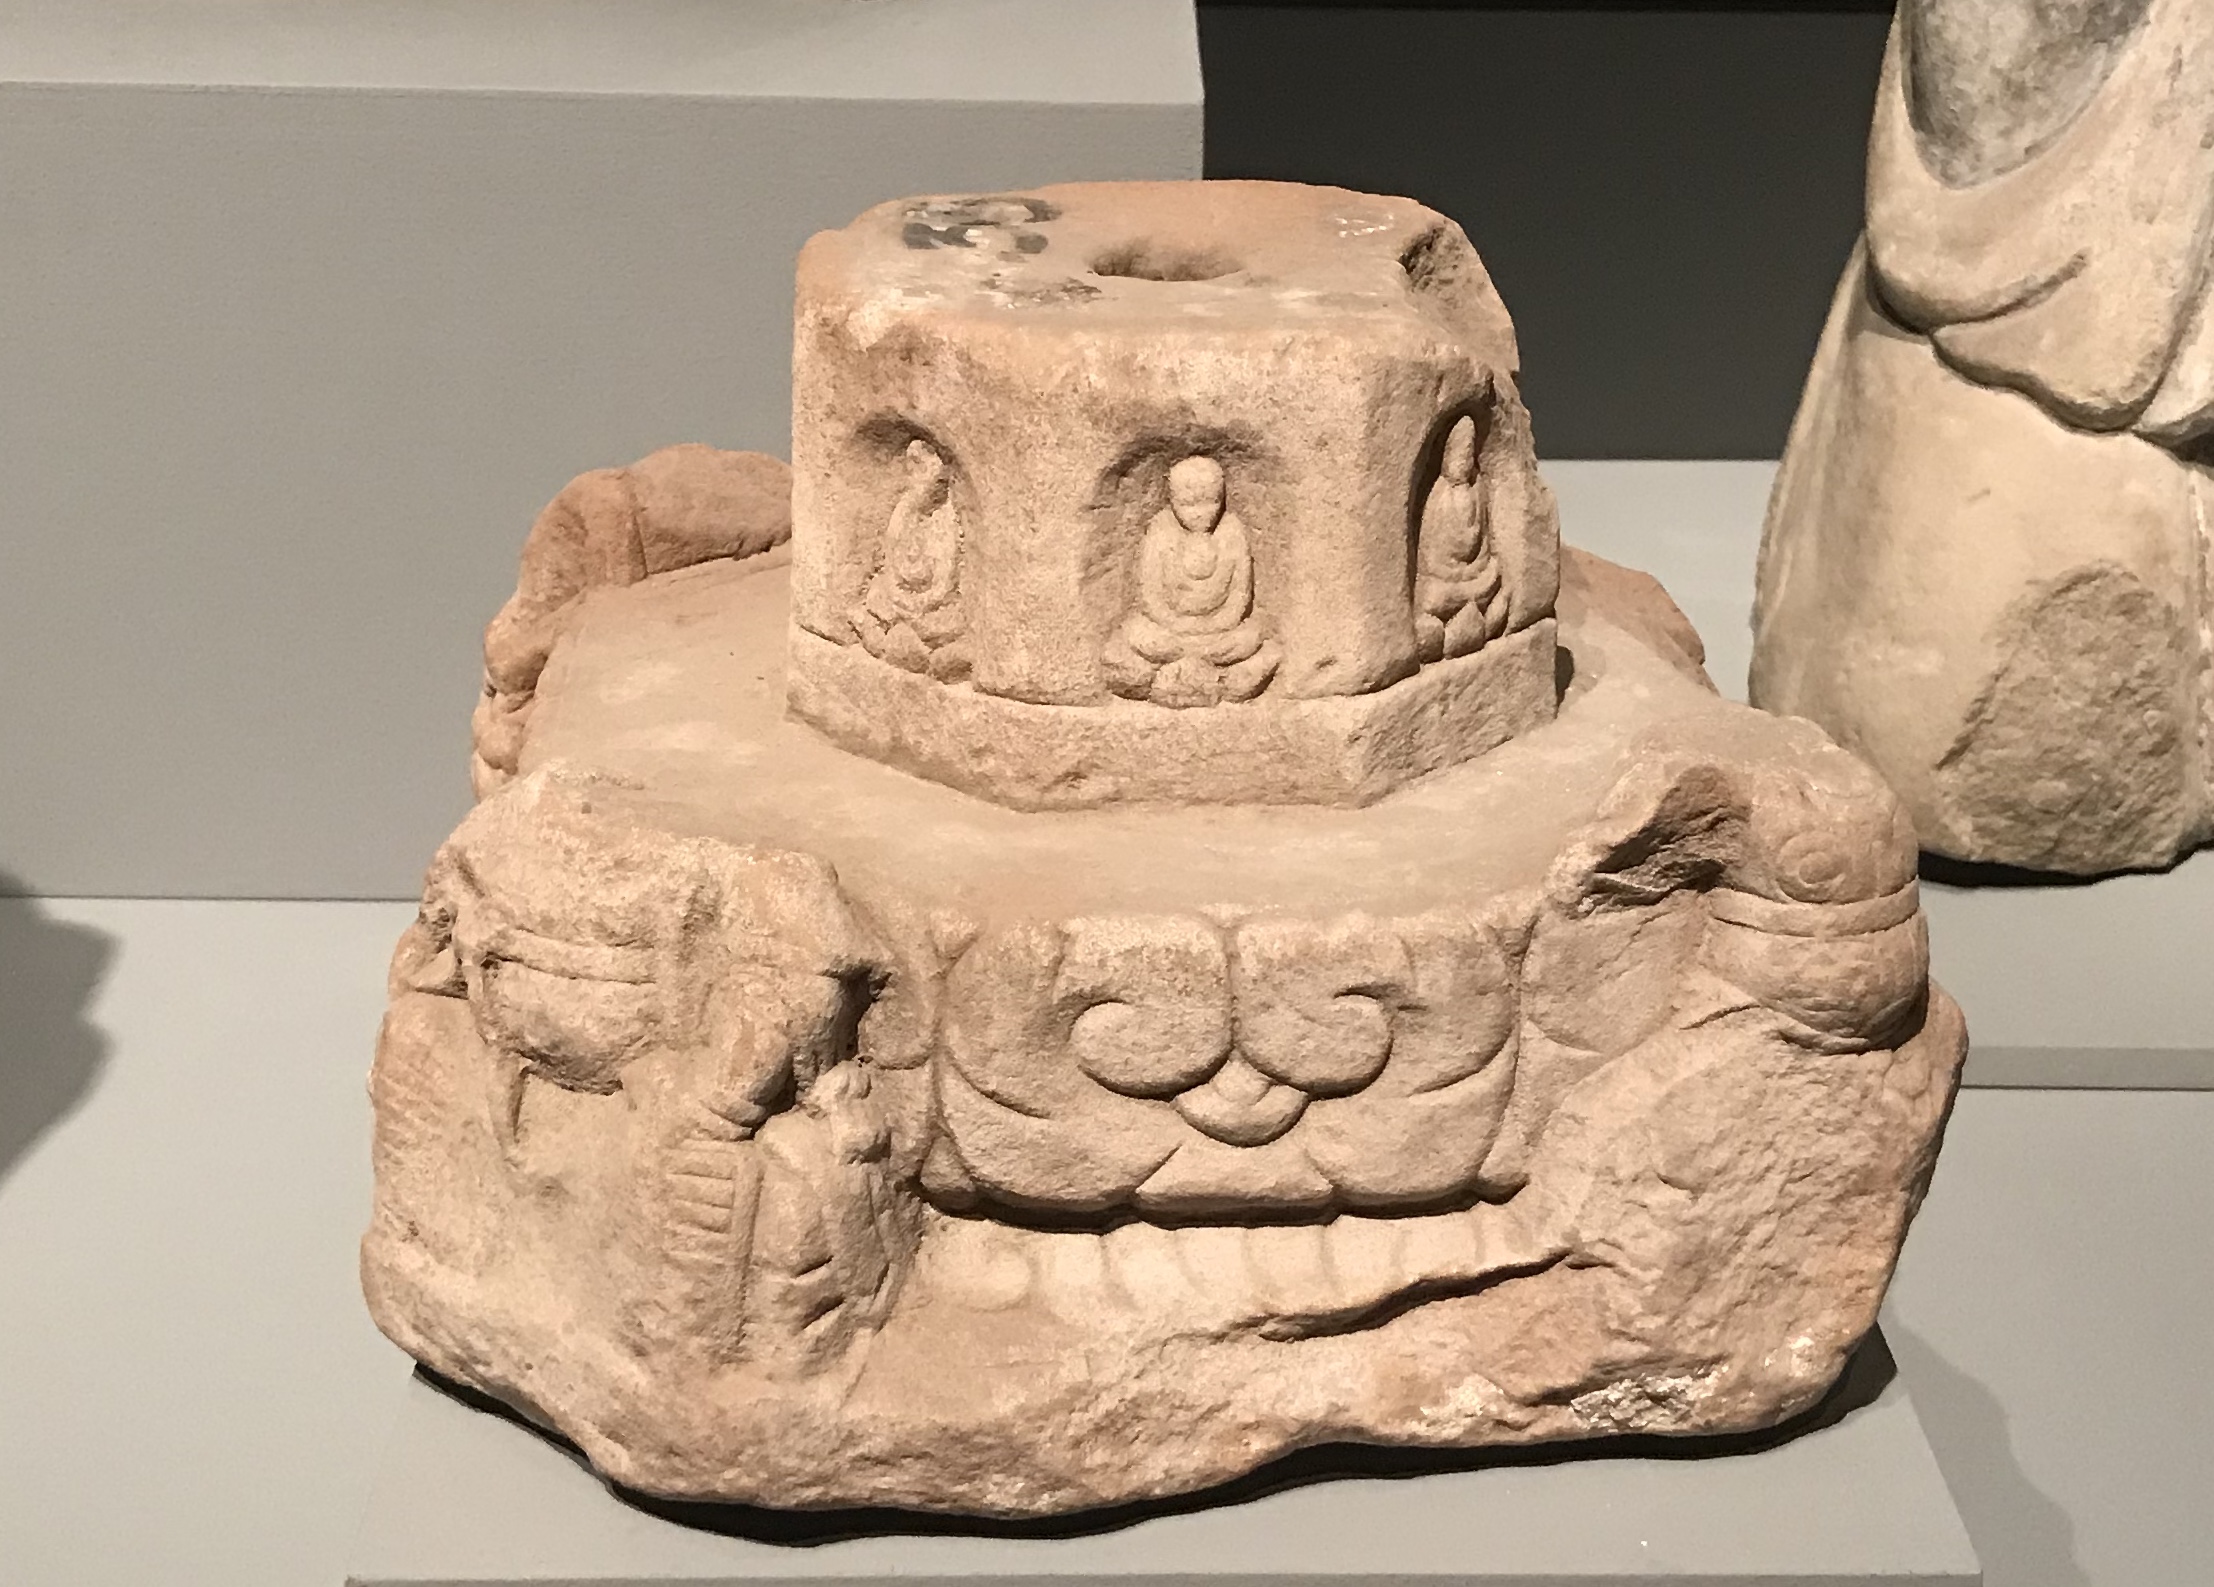 経幢残件-北宋-天下の大足-大足石刻の発見と継承-金沙遺跡博物館-成都